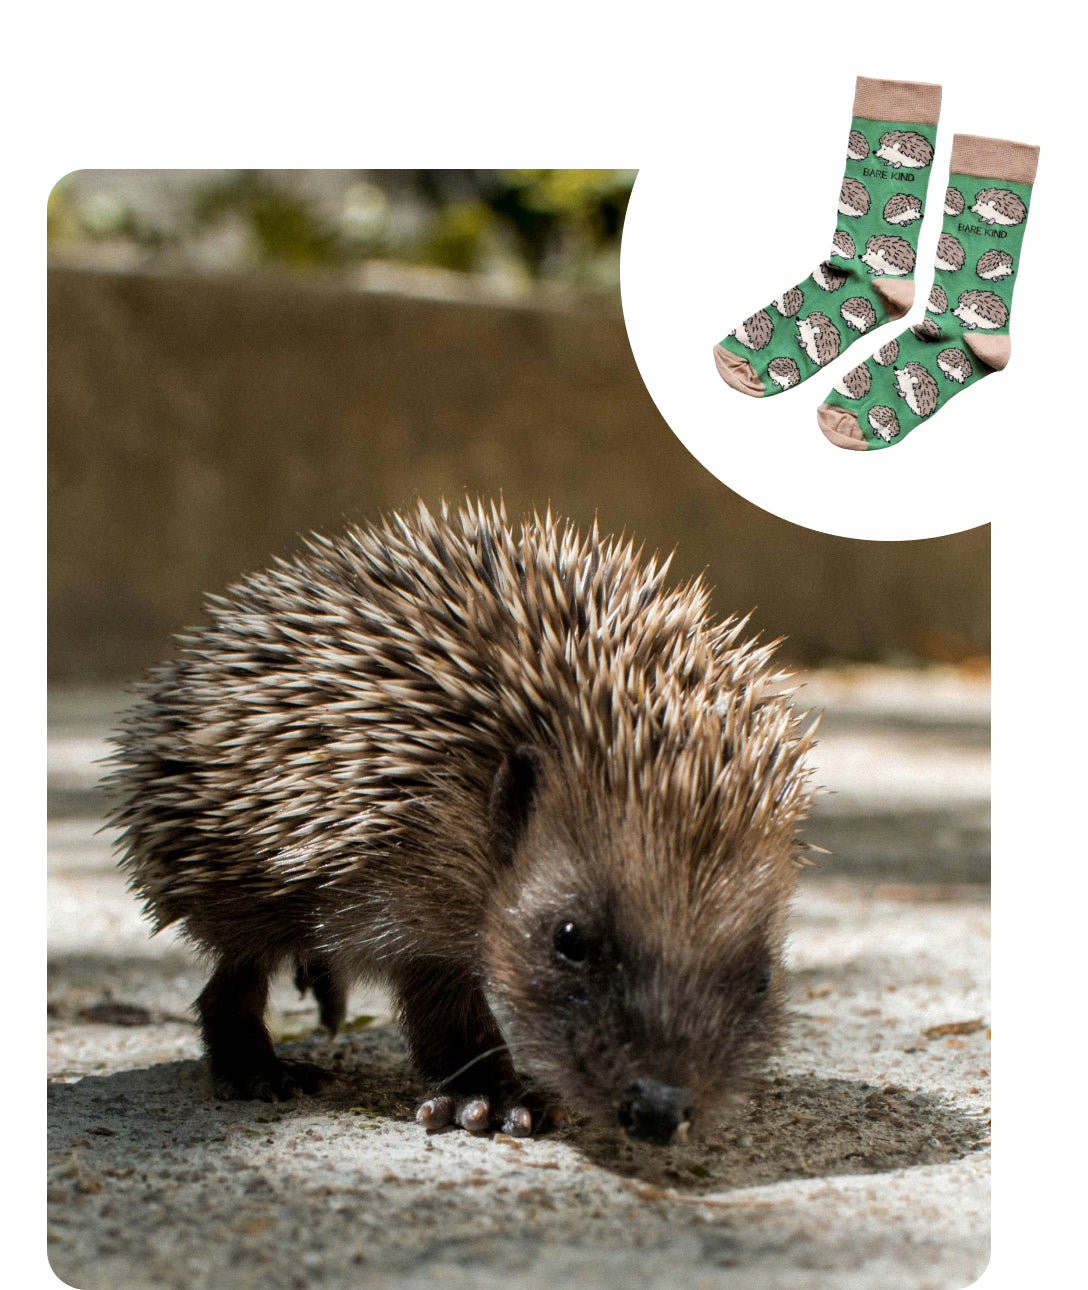 hedgehog image and hedgehog bamboo socks